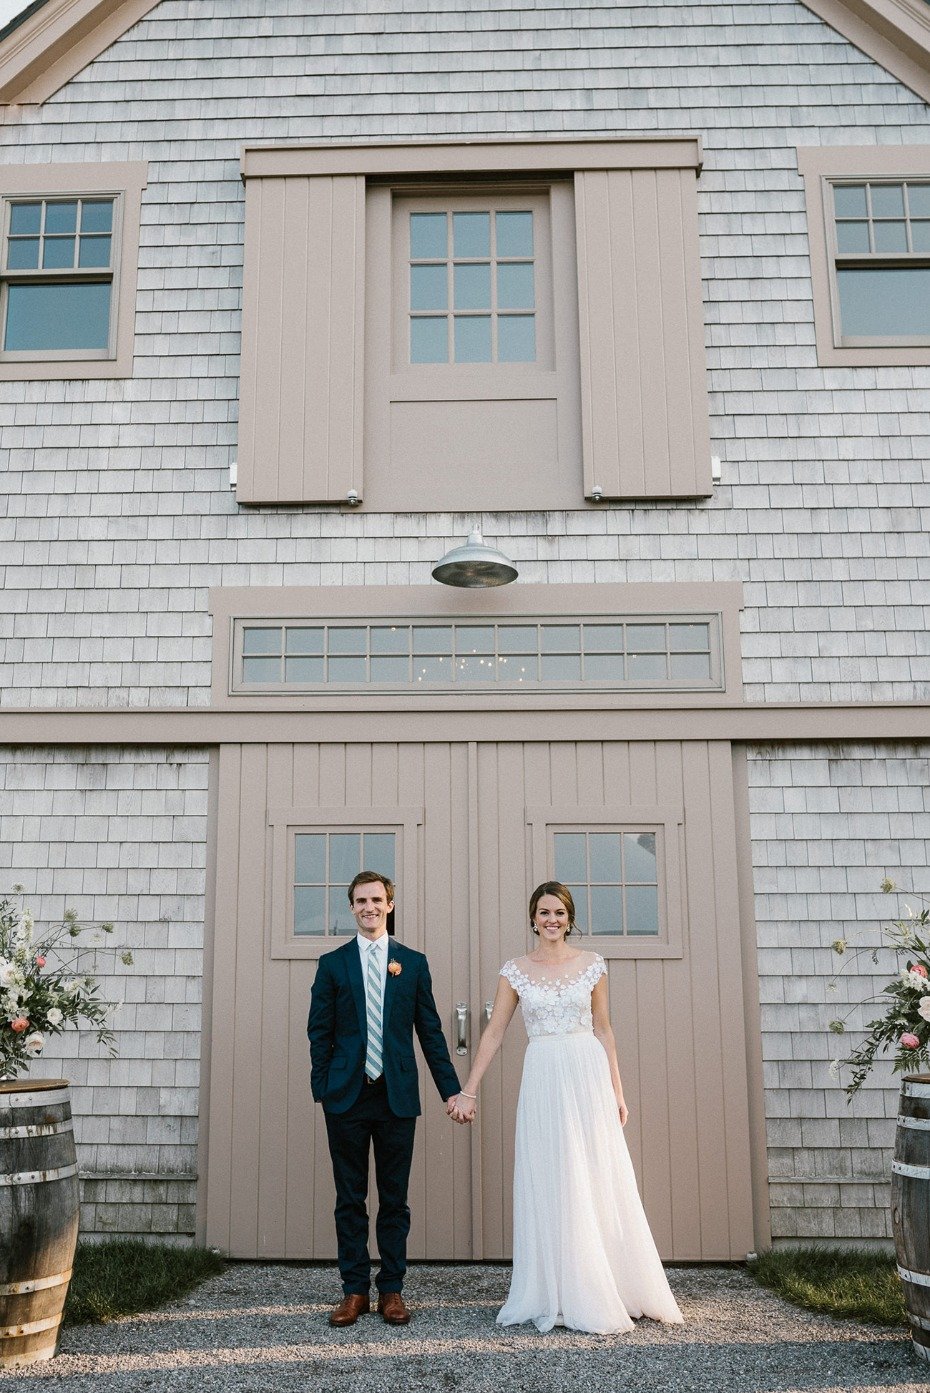 Beech Hill Barn wedding venue is Maine